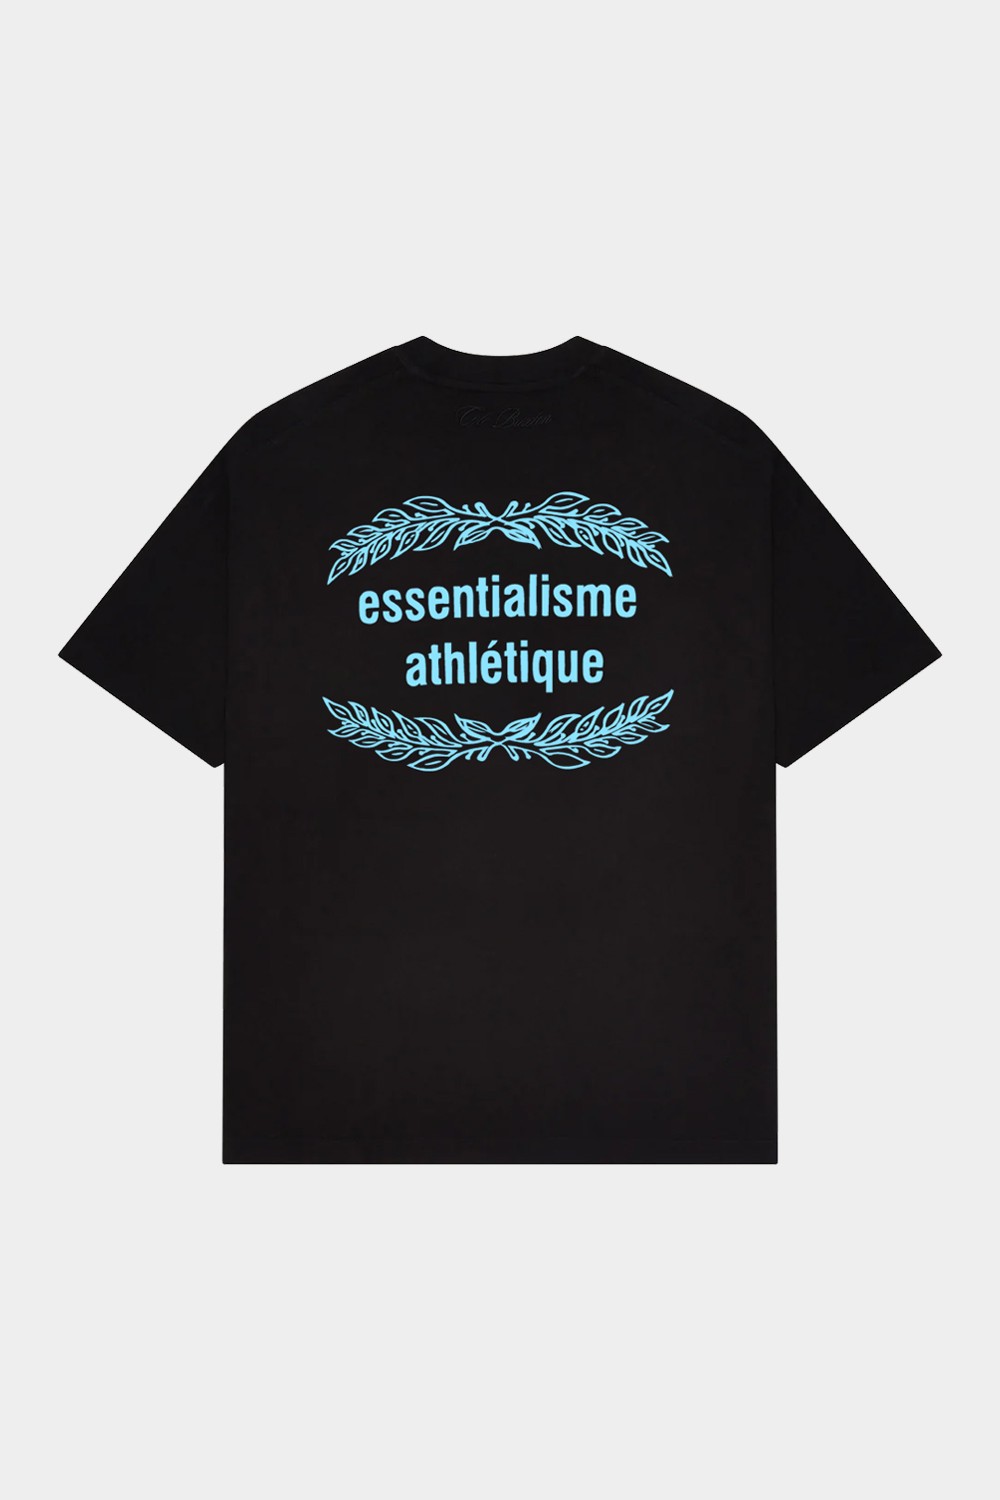 C.B. Oversized Essentialisme T Shirt Black (CLBXT11)